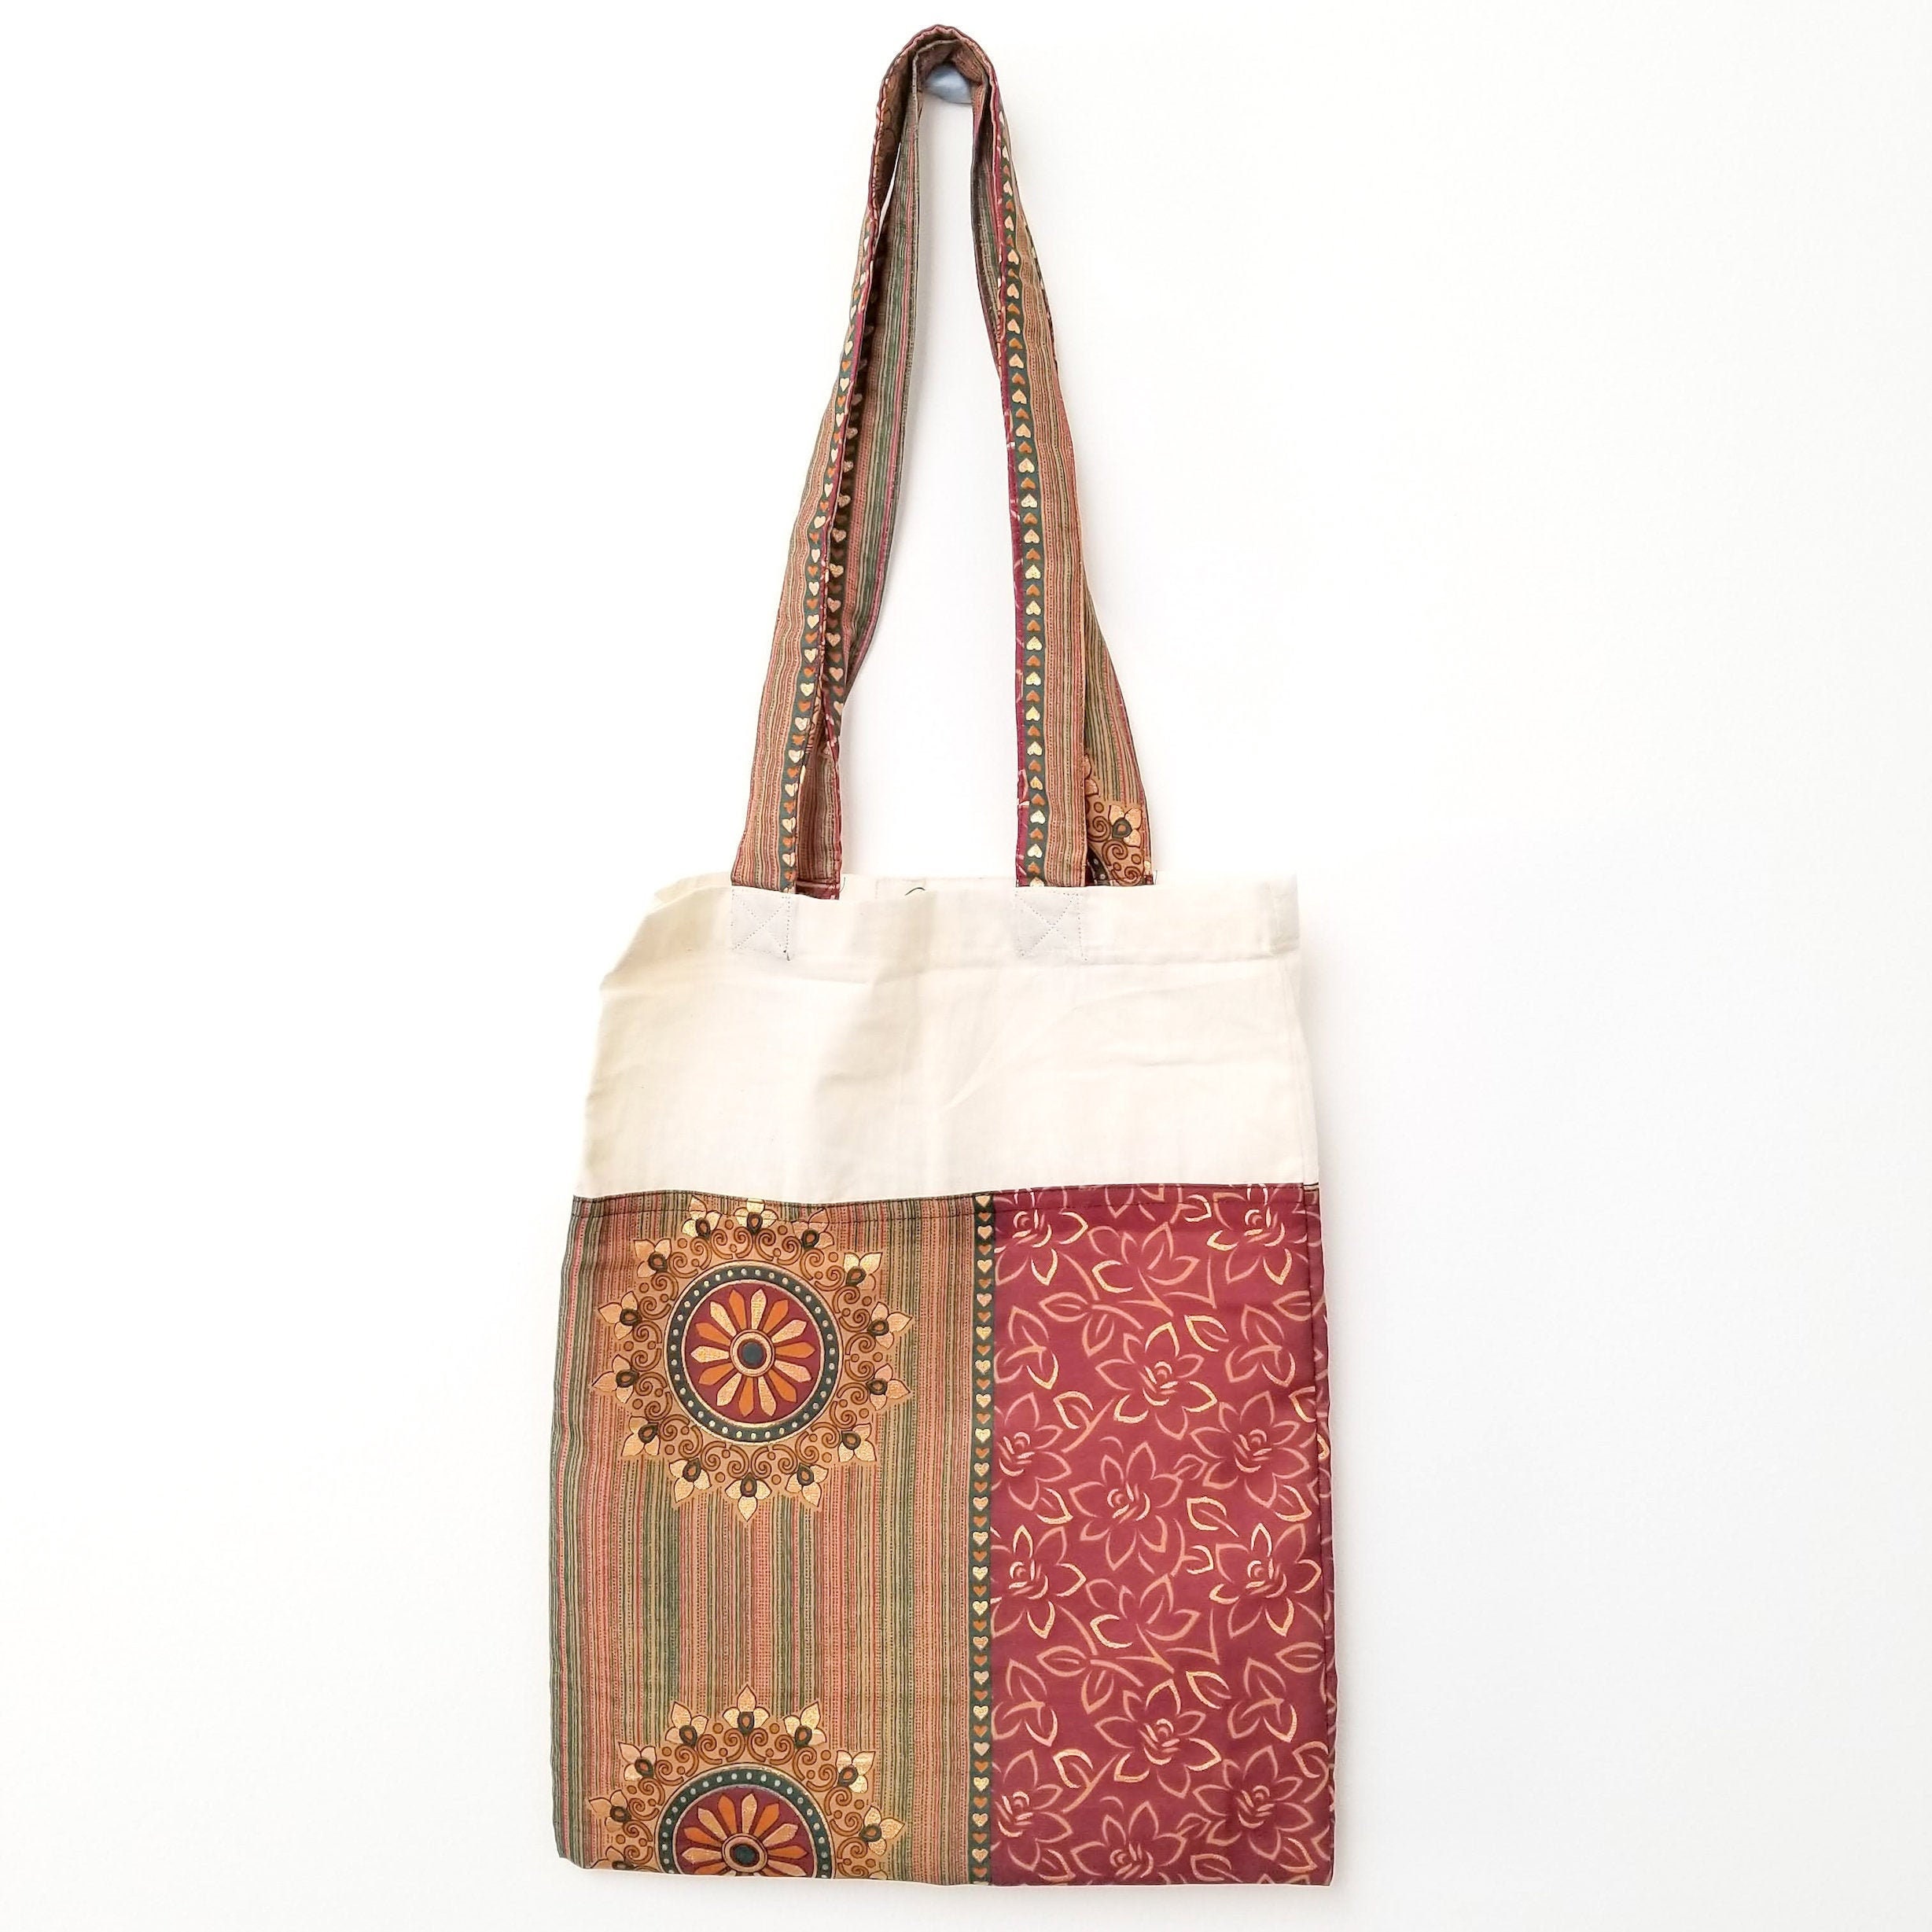 Vintage sari tote bag reusable upcycled sari organic cotton | Etsy